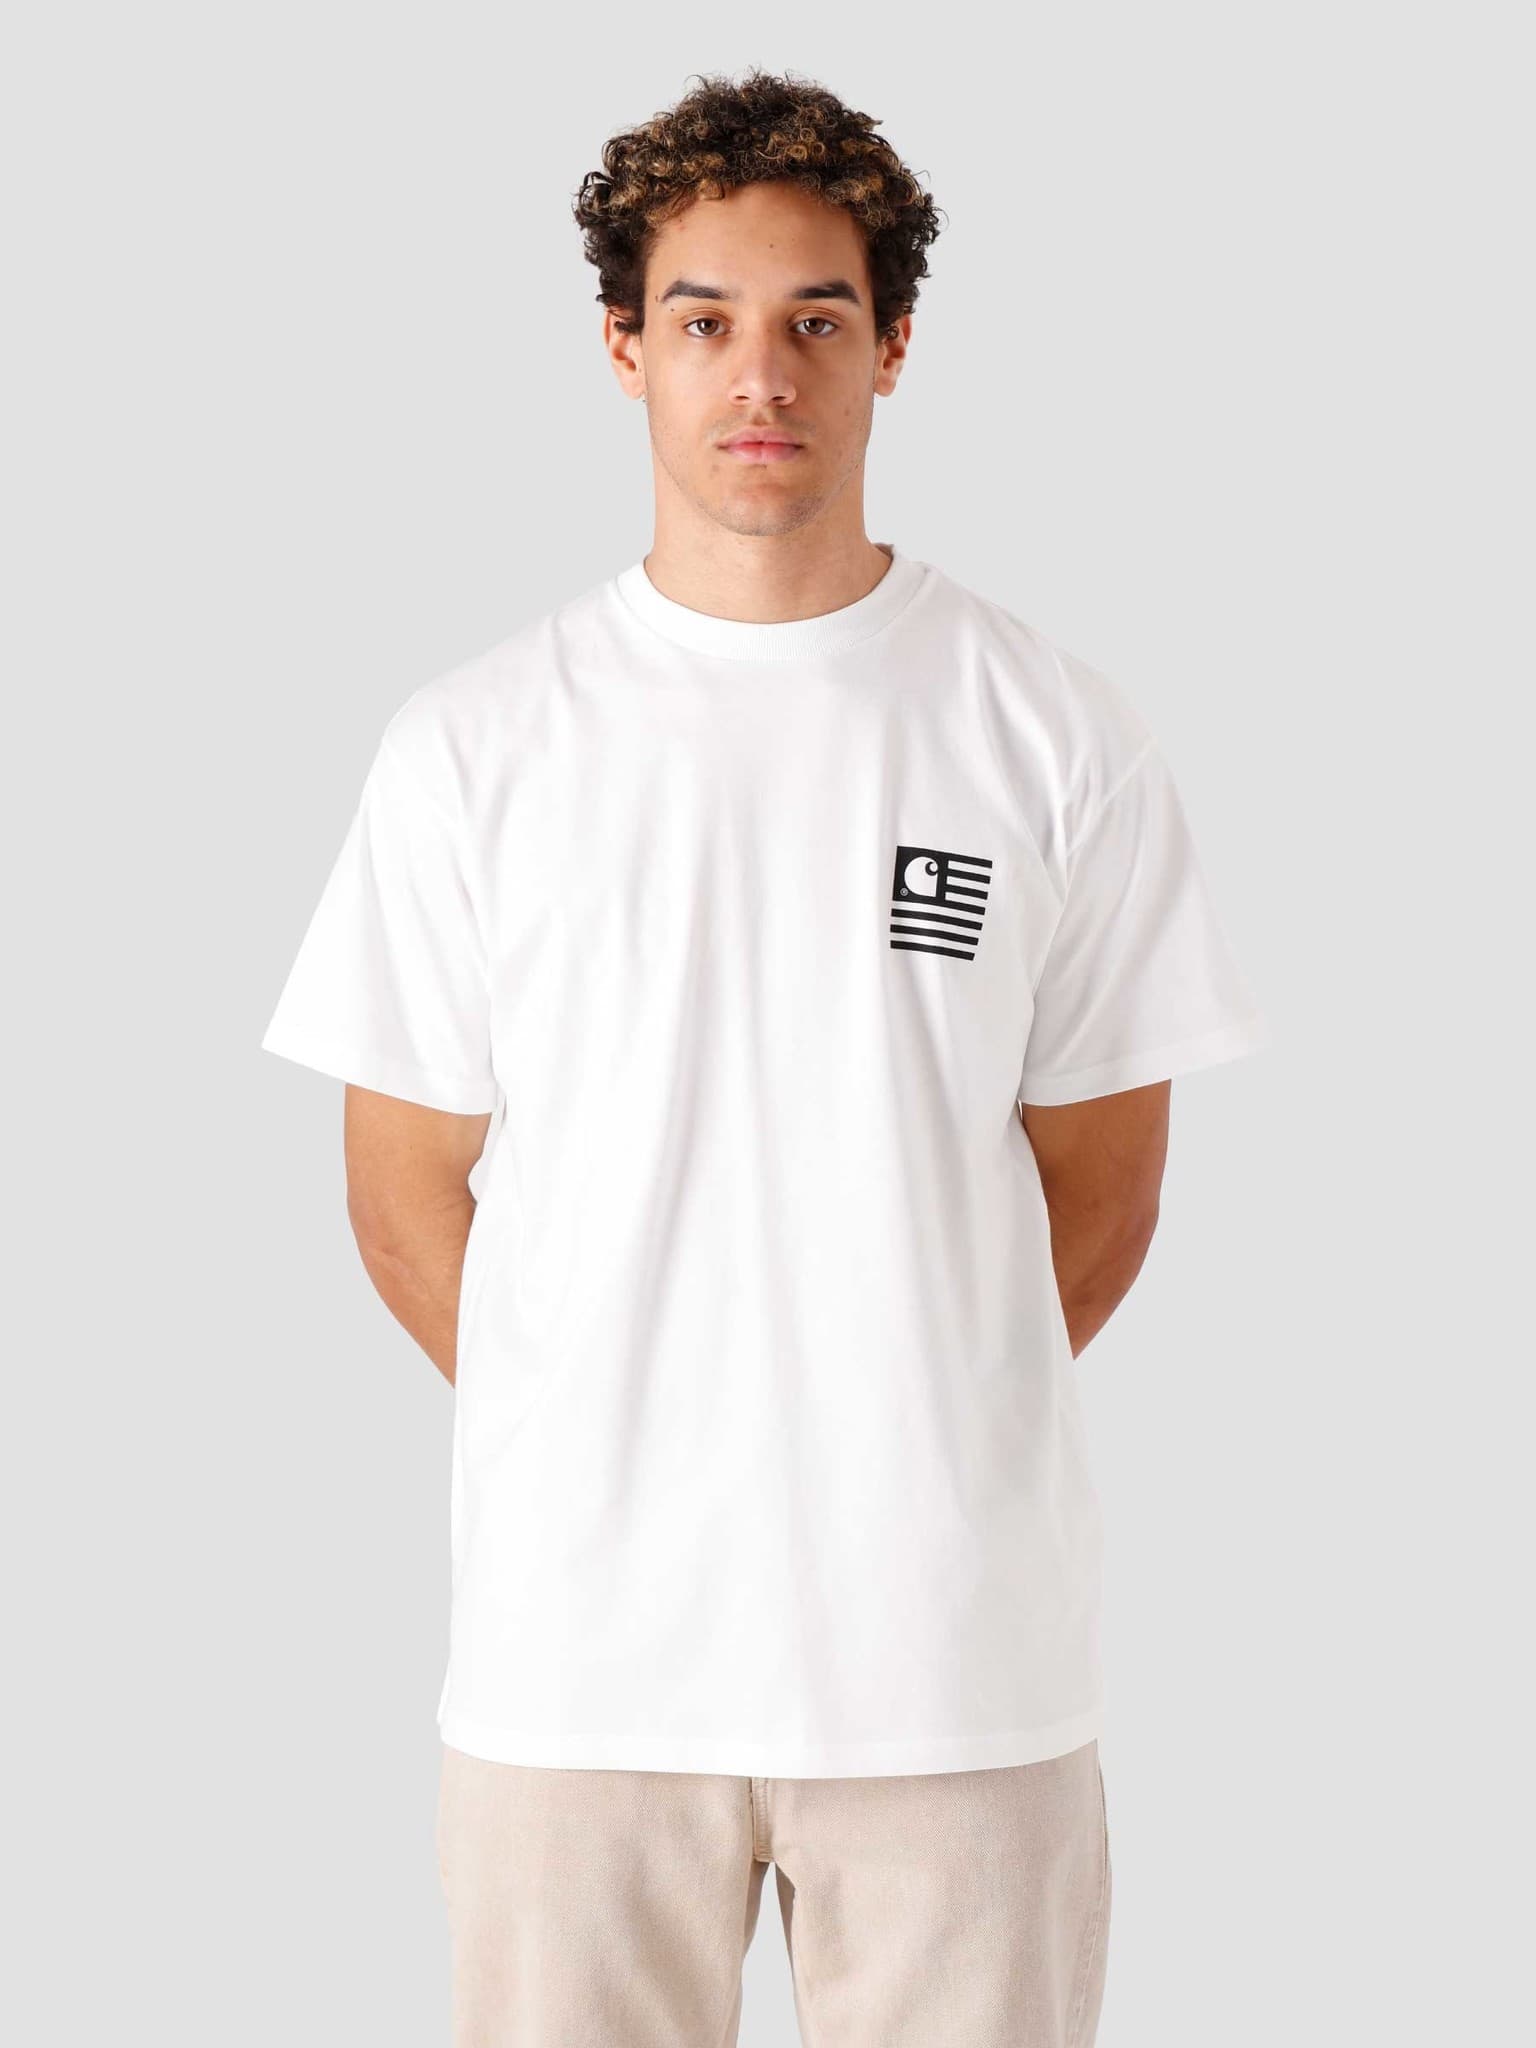 SS Wavy State T Shirt White Black I029011-290